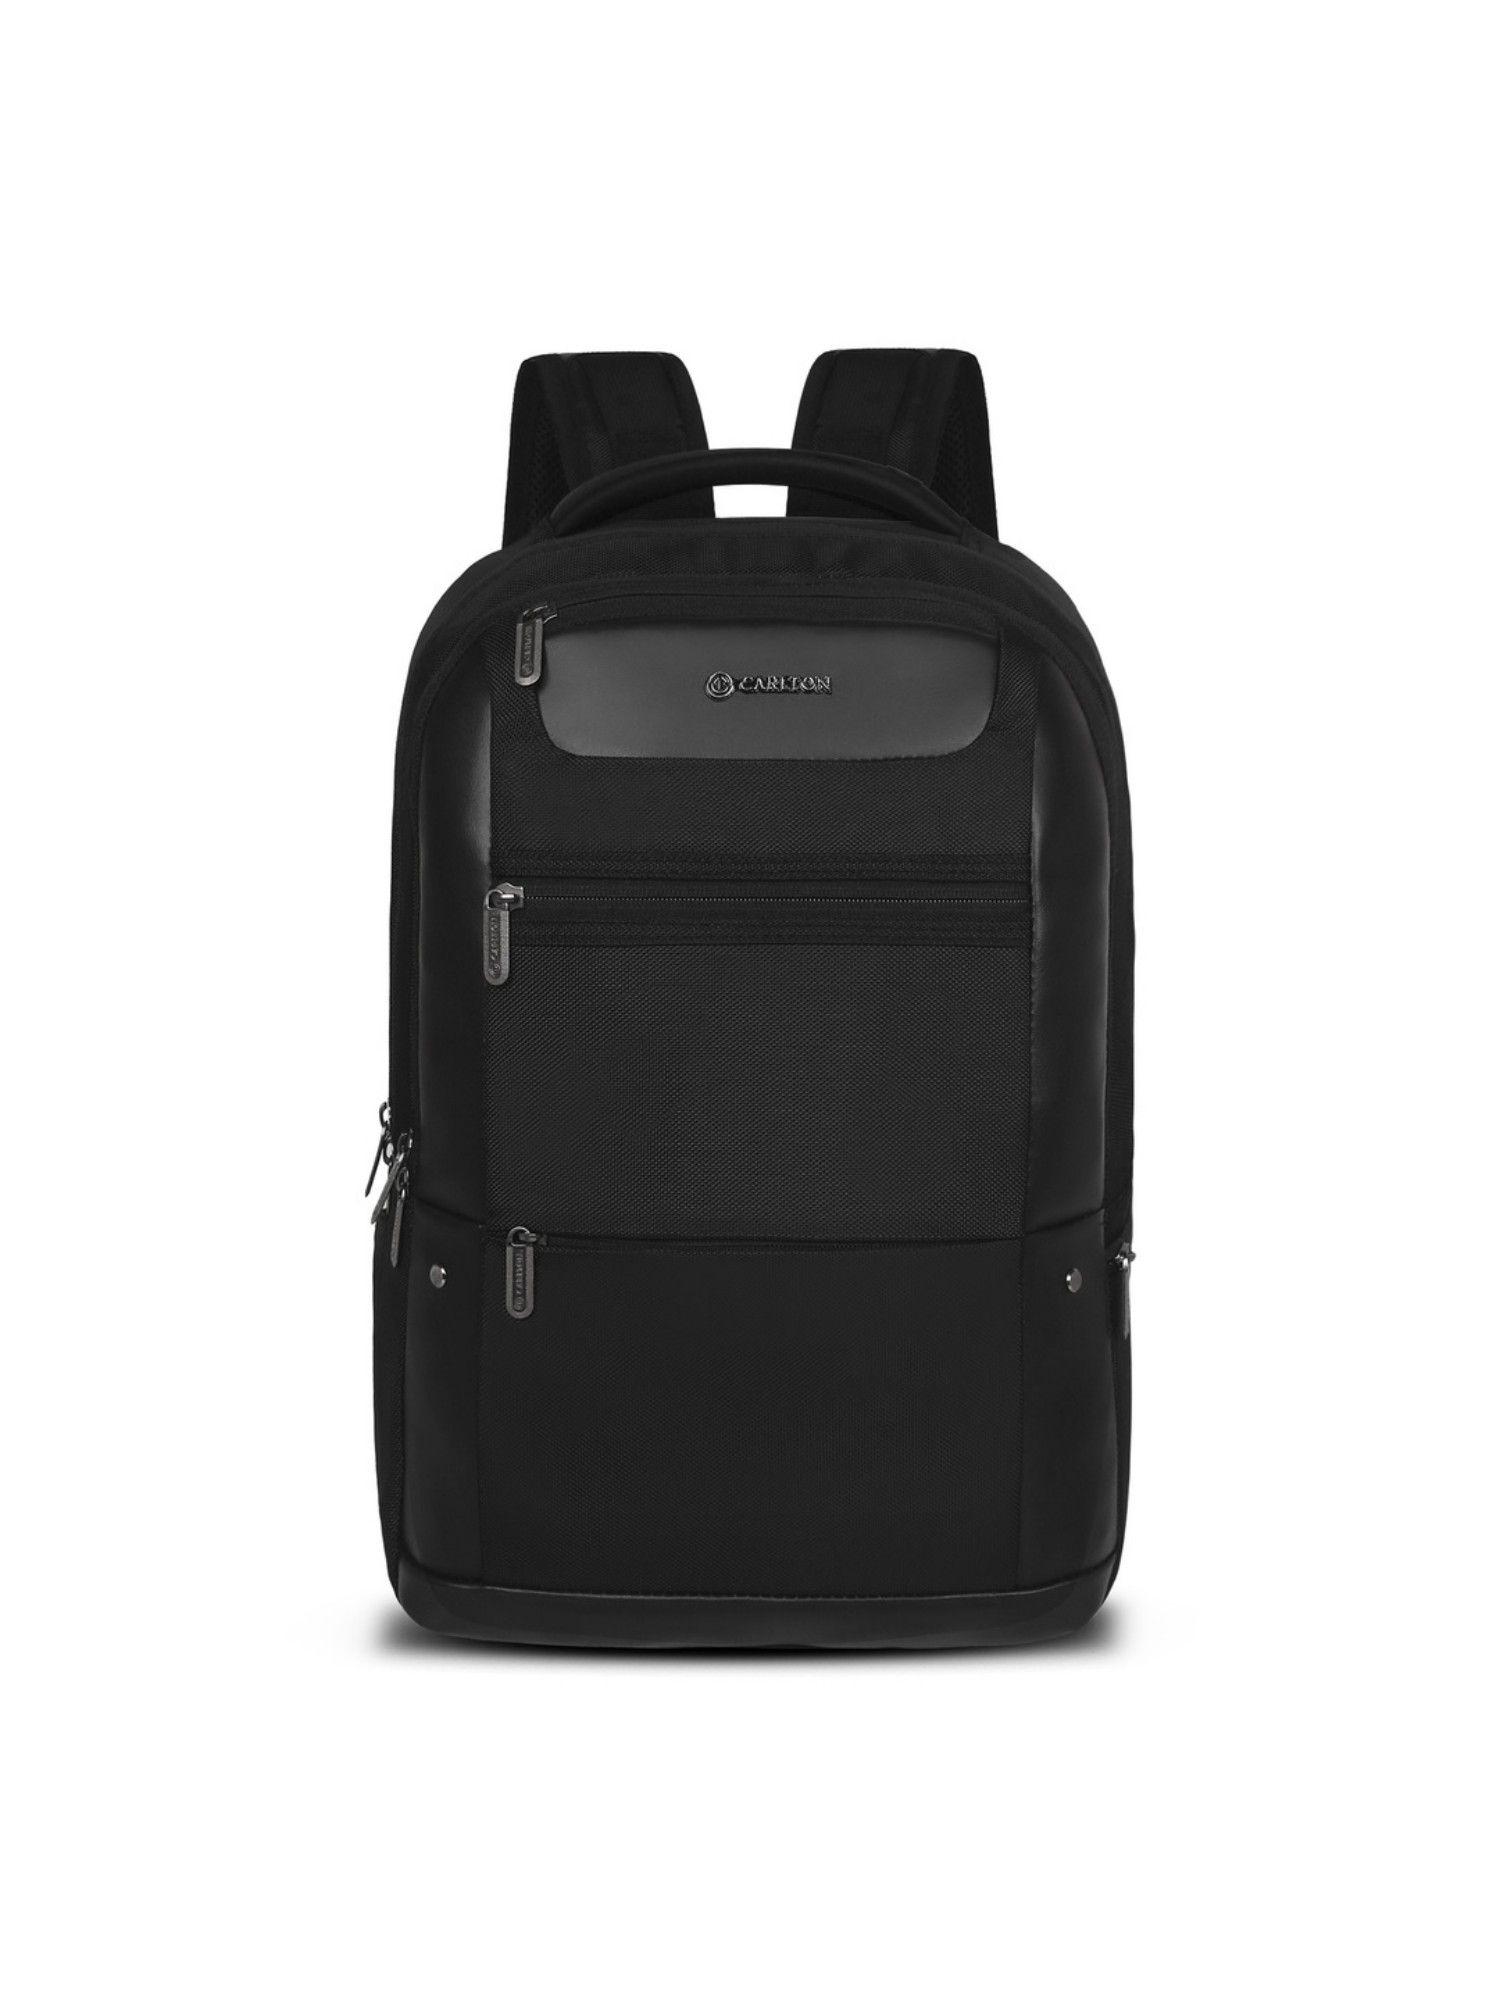 hampshire 01 laptop backpack ferrous black